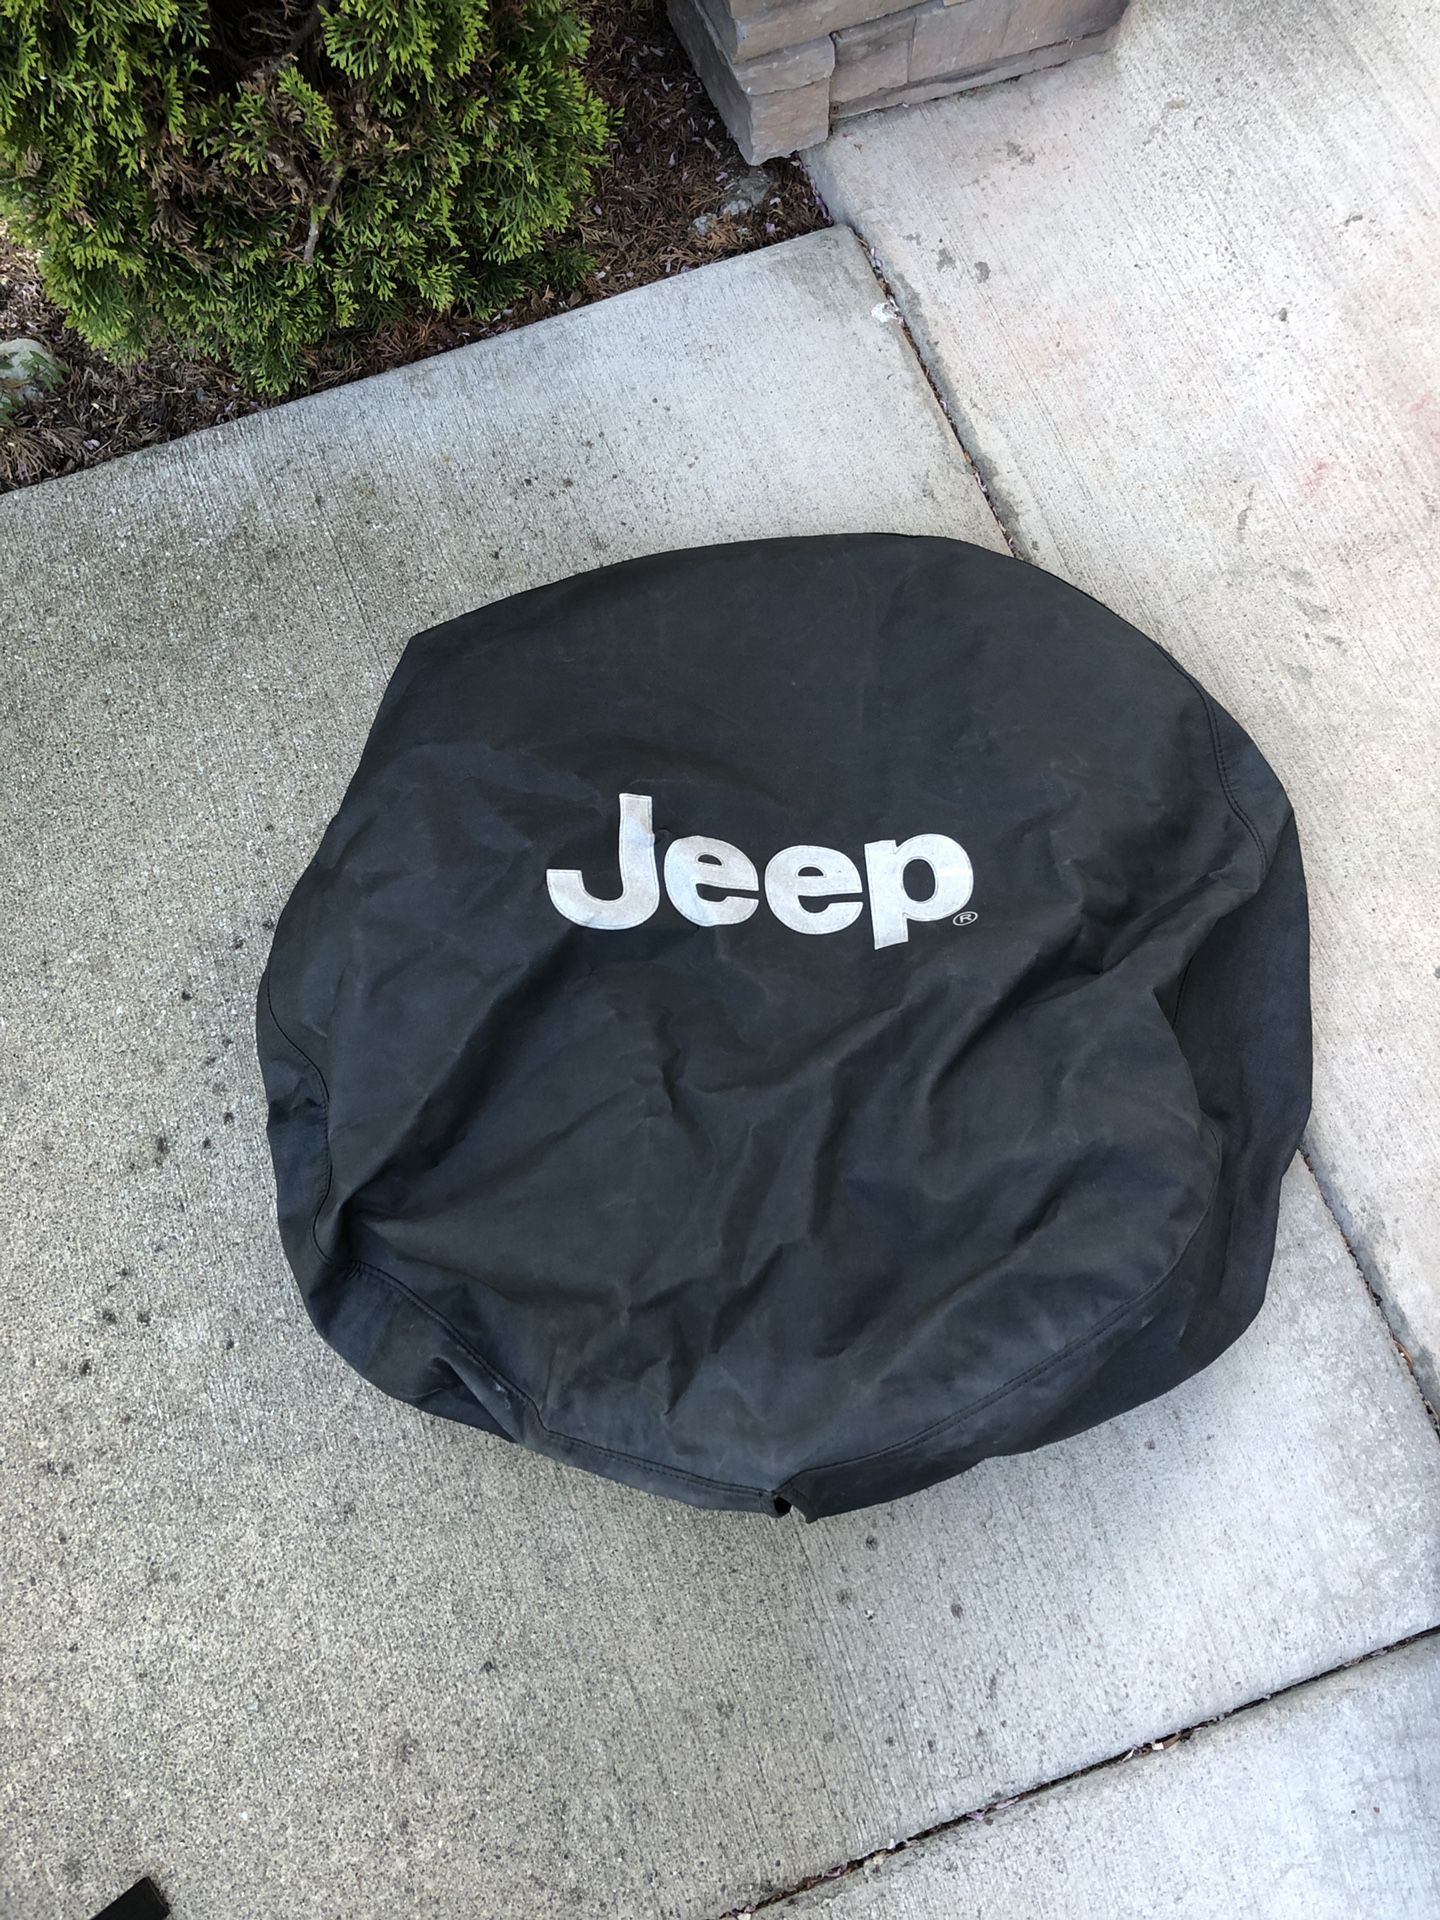 Jeep wheel cover